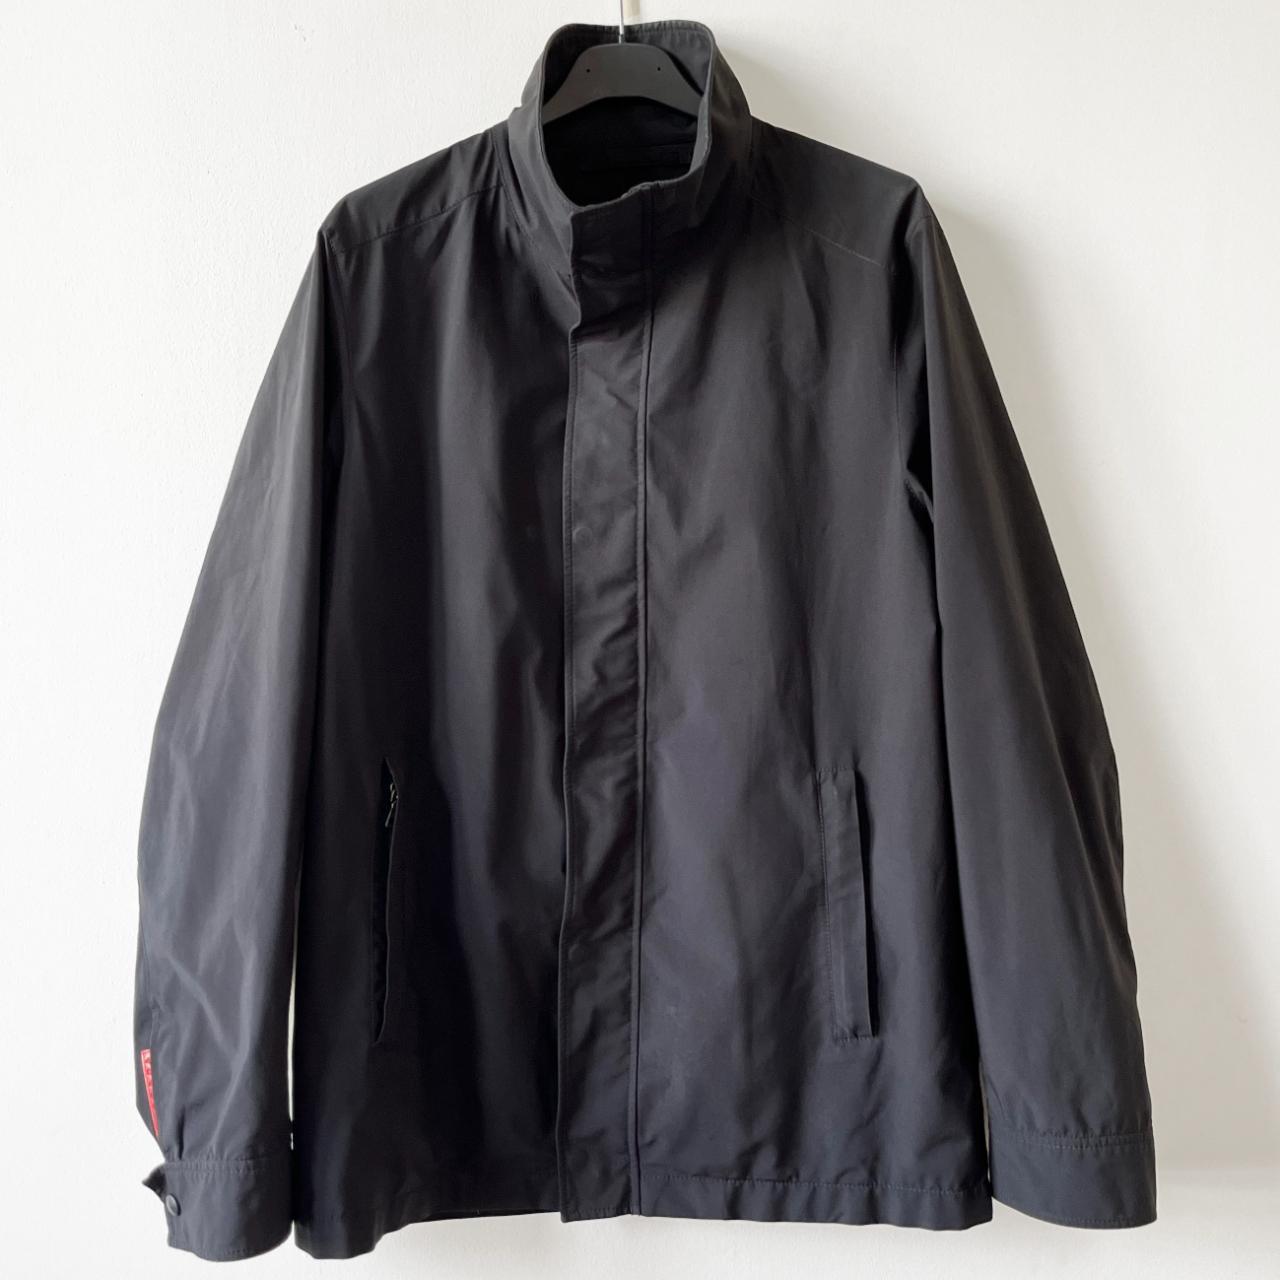 Prada mens nylon jacket Art SGA84B. Features relaxed